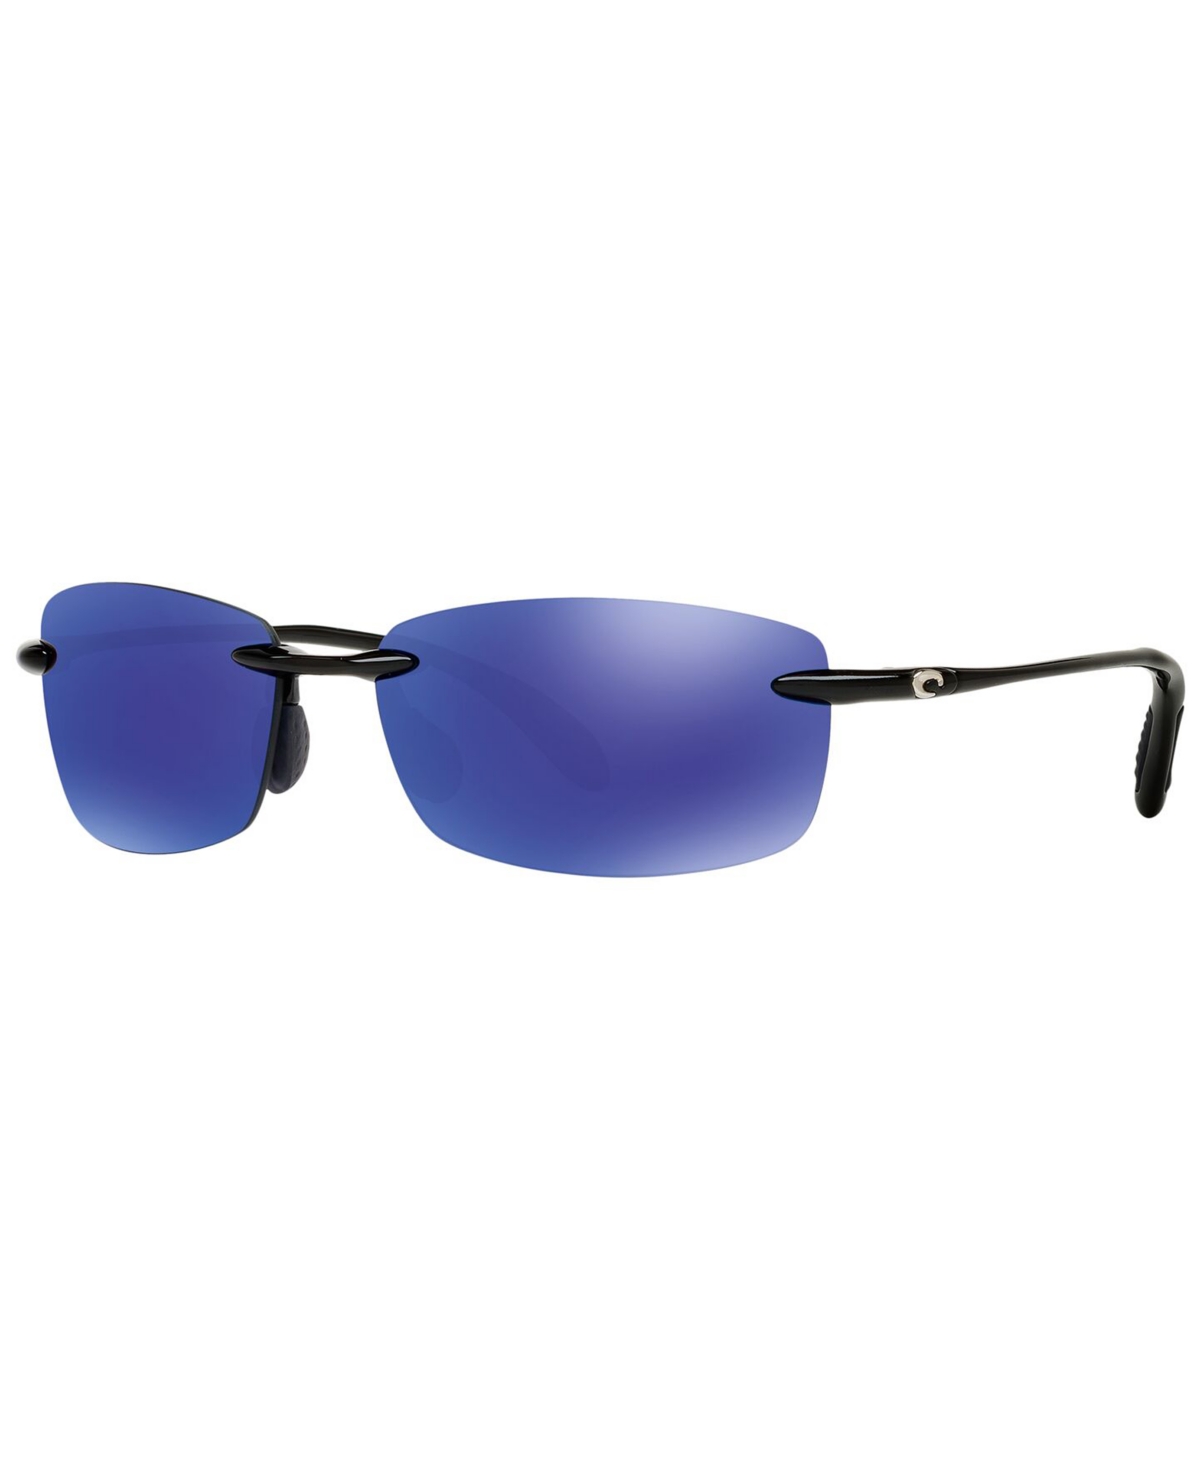 Unisex Polarized Sunglasses, 6S000121 - BLACK SHINY/BLUE MIRROR